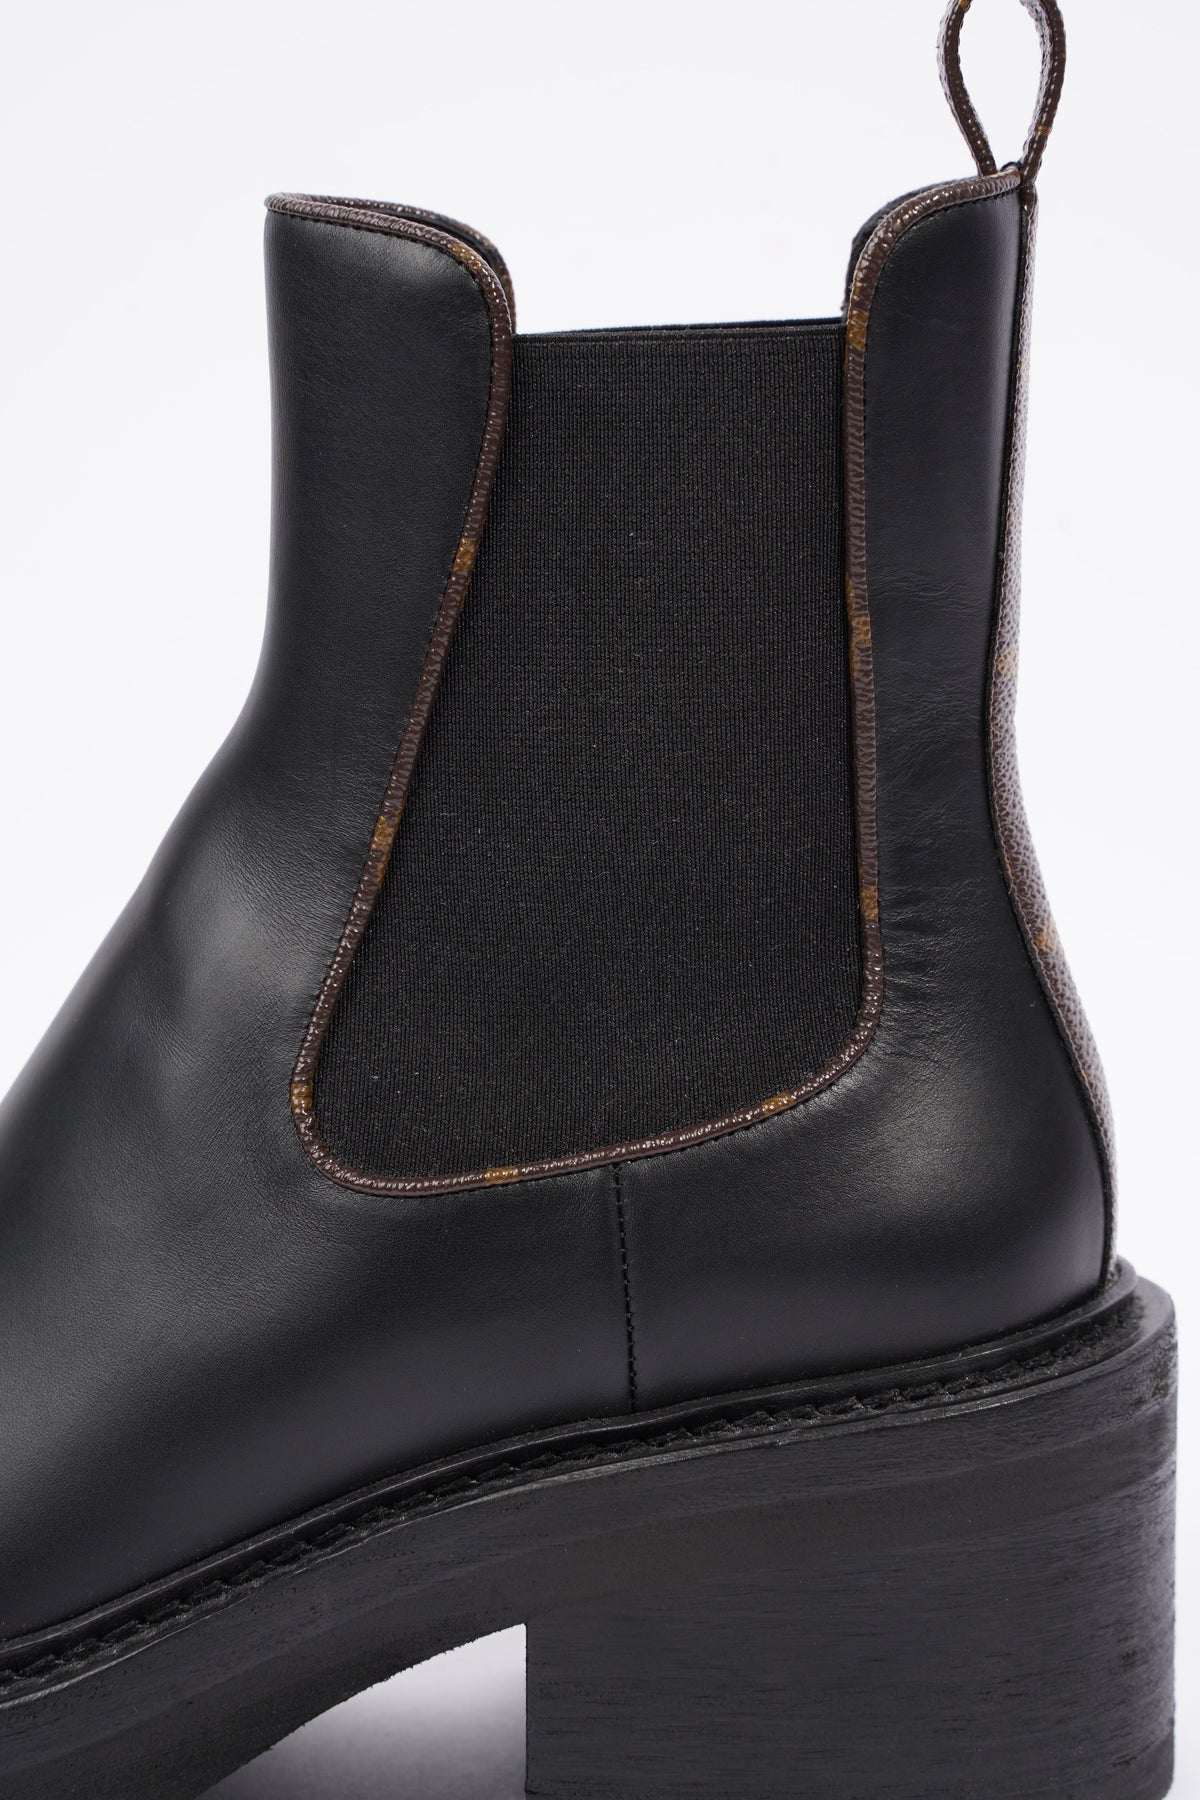 Louis Vuitton LV Record Chelsea Boot BLACK. Size 38.0